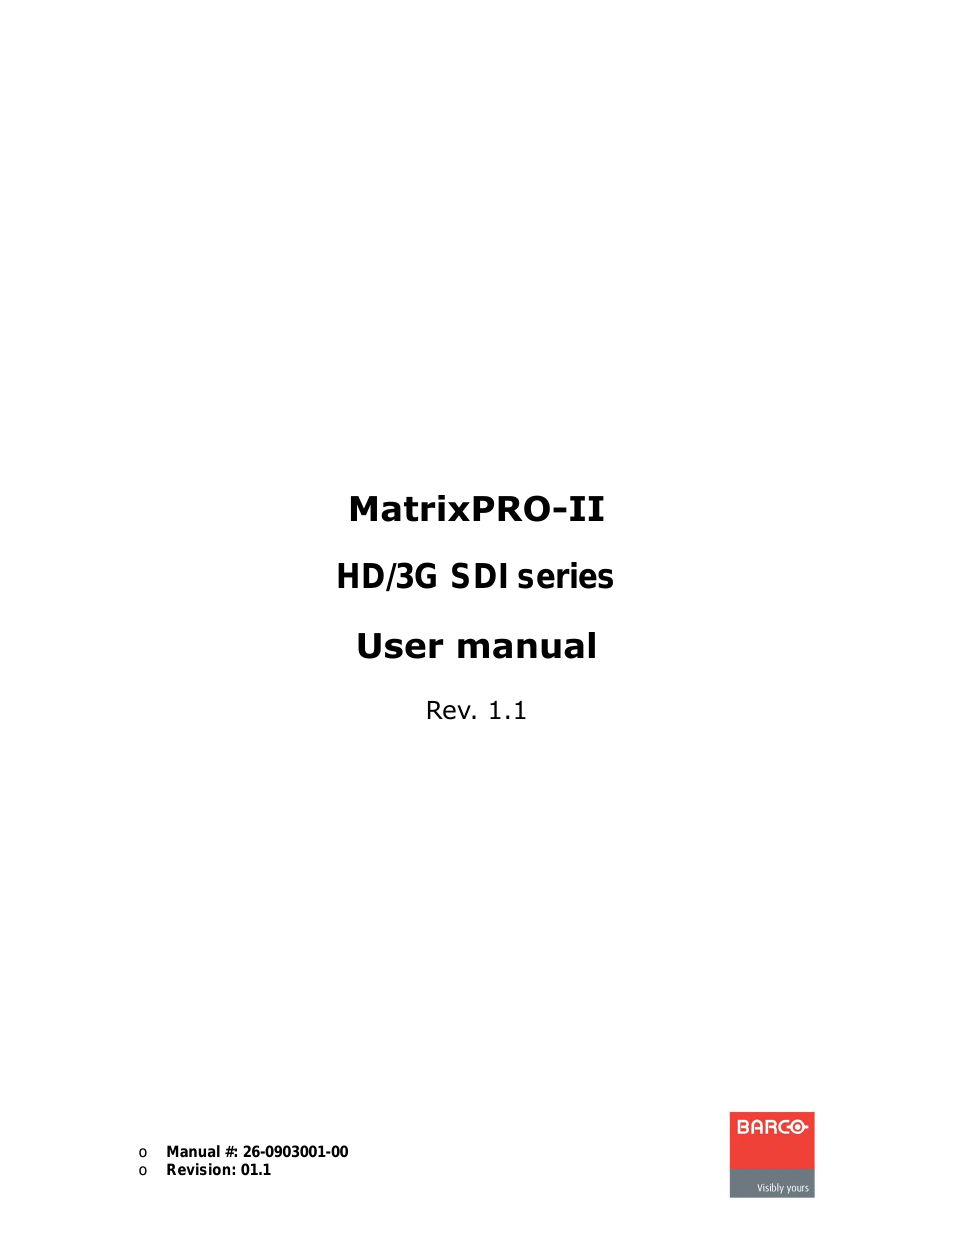 MATRIXPRO-II 3G/HD/SD-SD